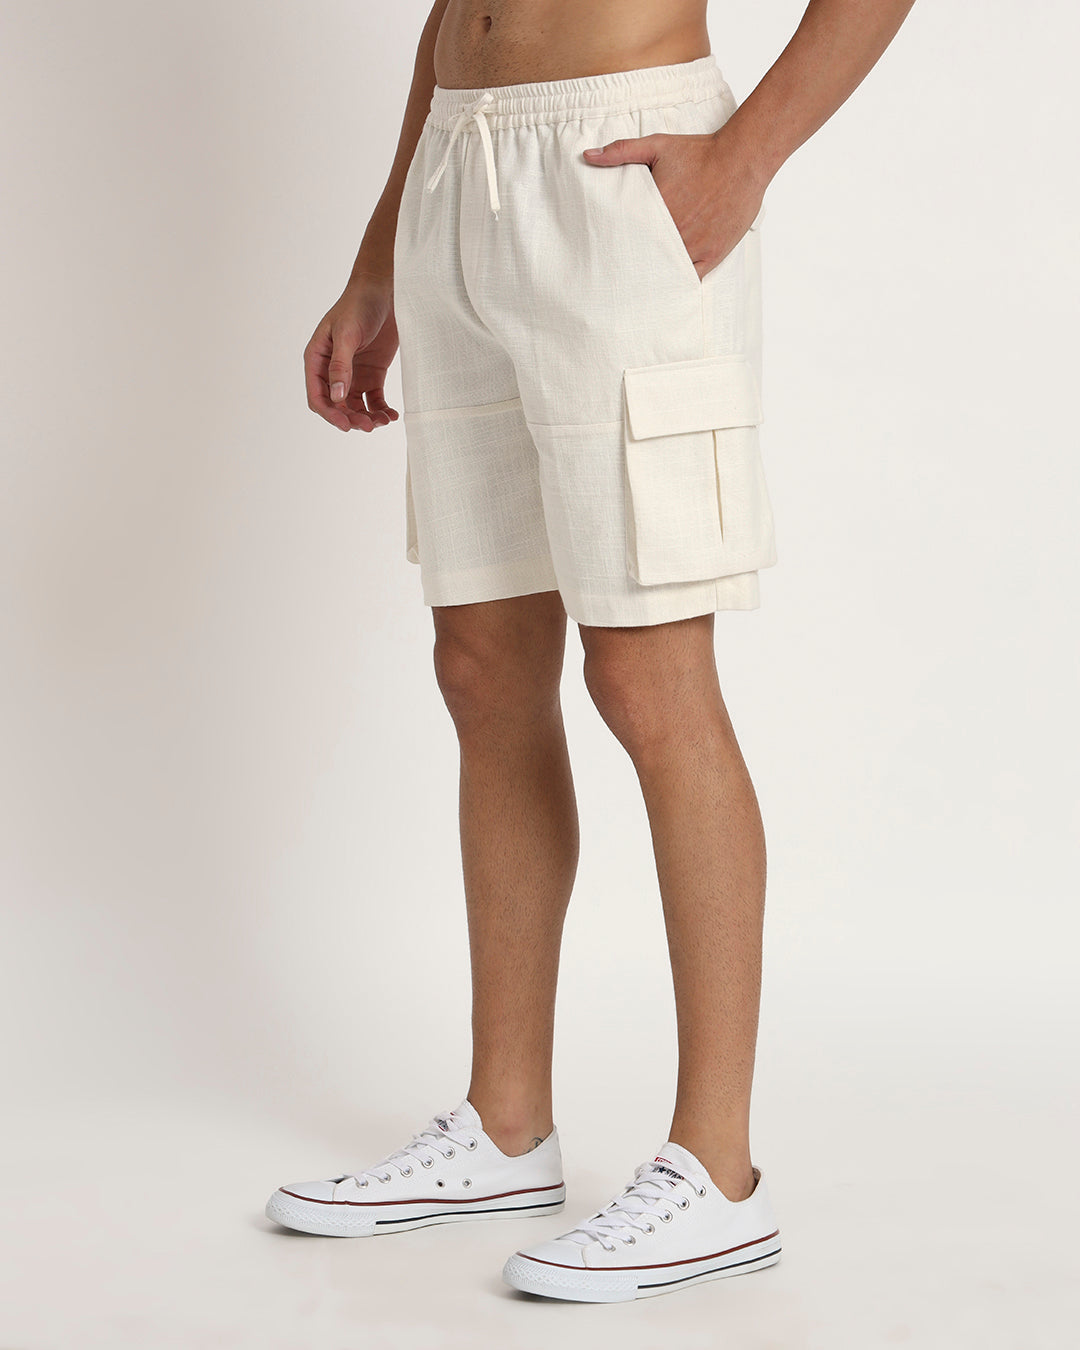 Combo: Classic Deep Teal Half Sleeves Men's Shirt & Cargo Shorts